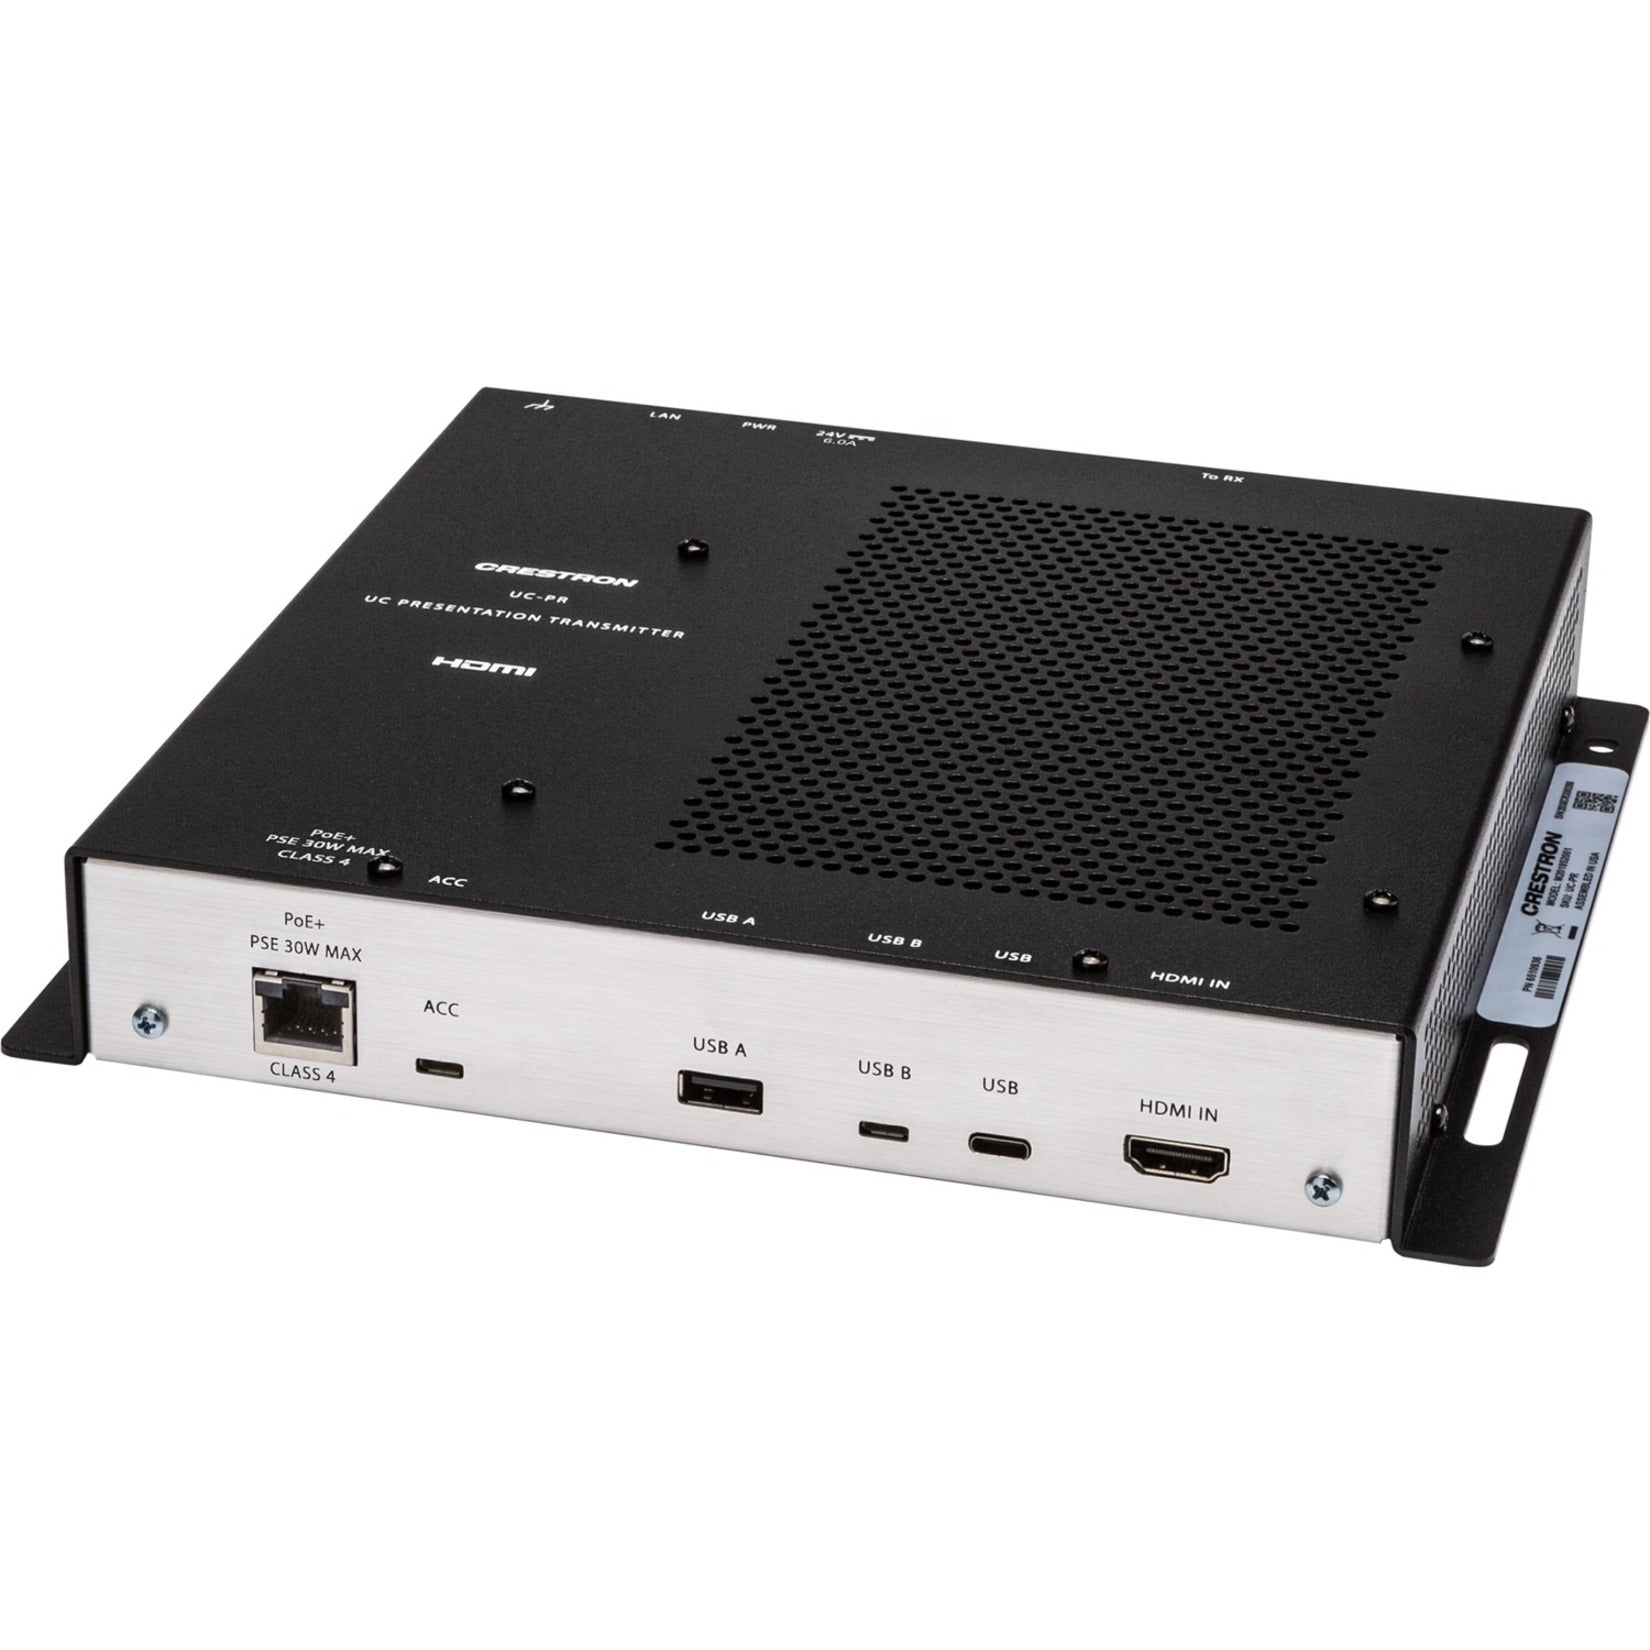 Crestron 6511629 Flex UC-MMX30-T Video Conference Equipment, Full HD, CMOS Image Sensor